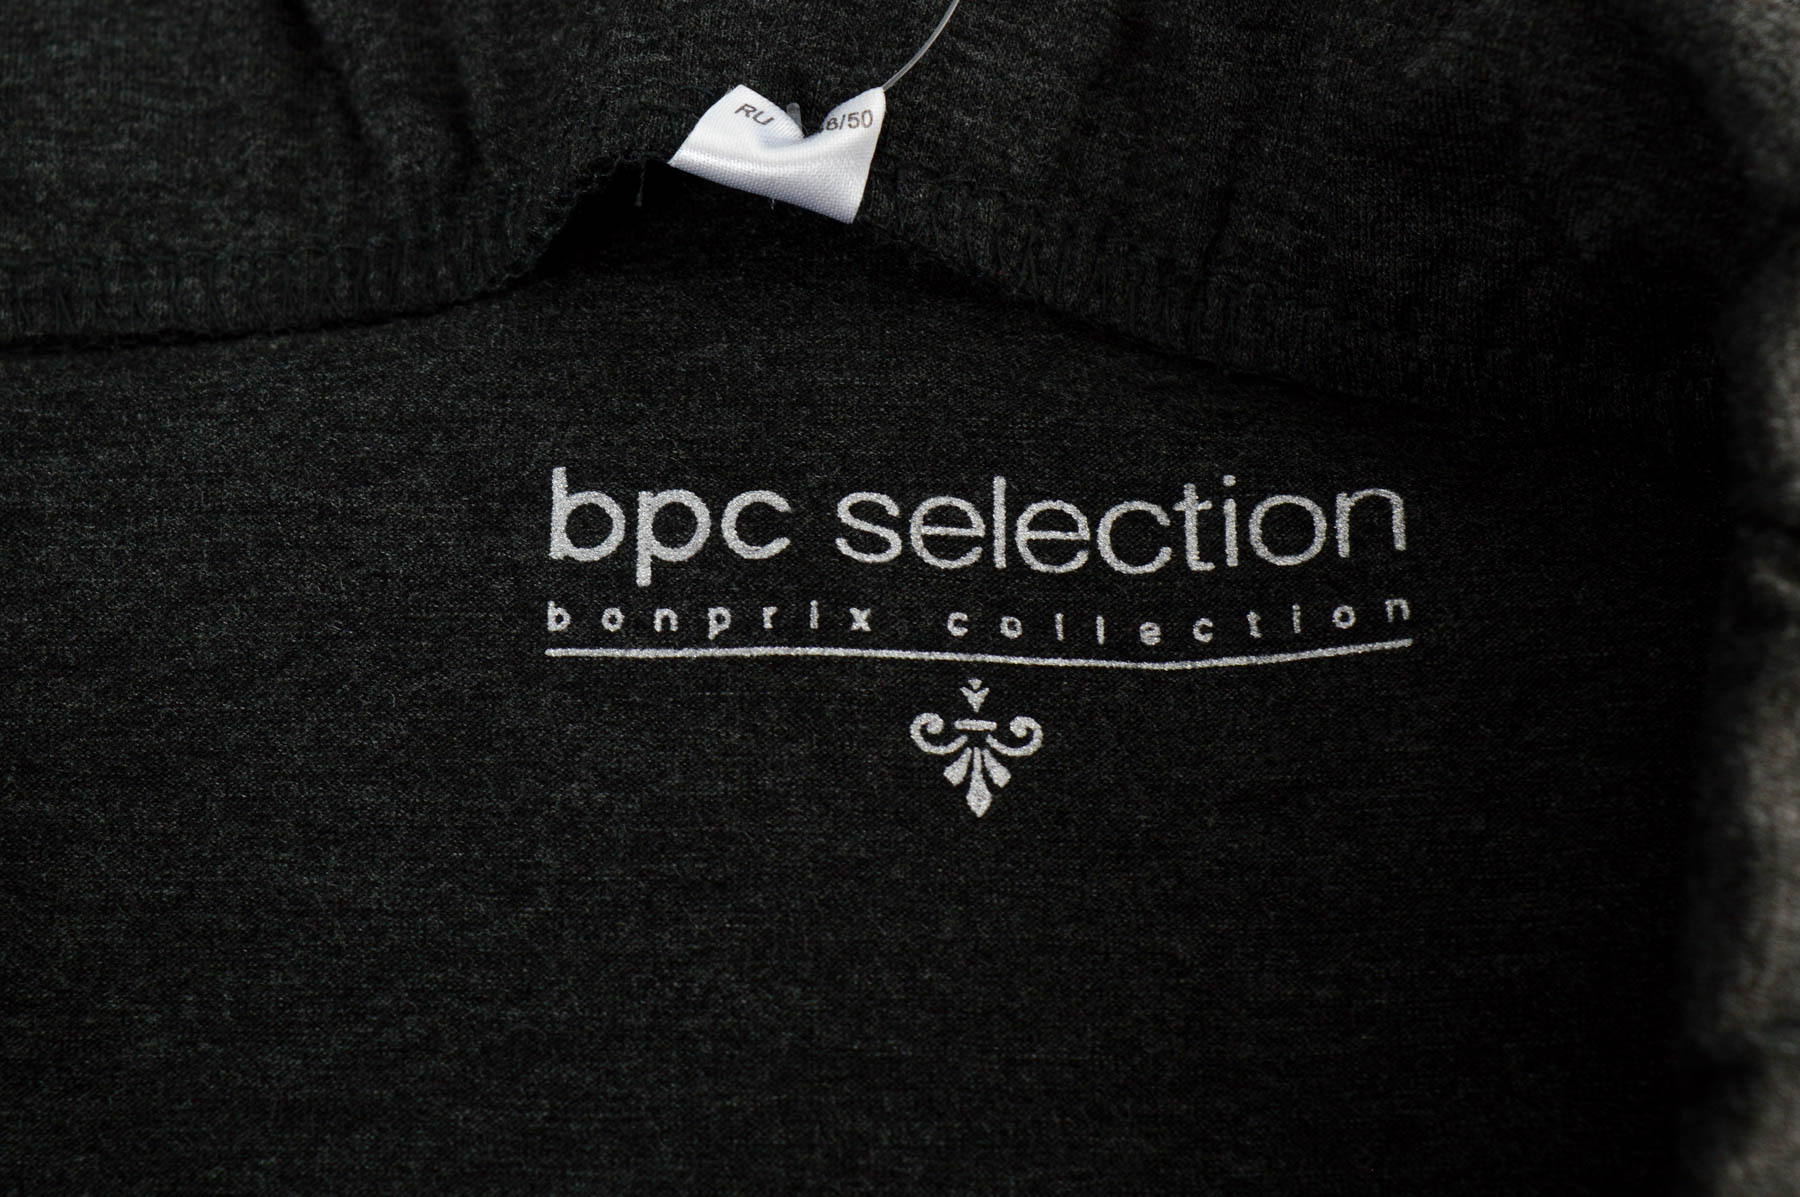 Skirt - Bpc selection bonprix collection - 2